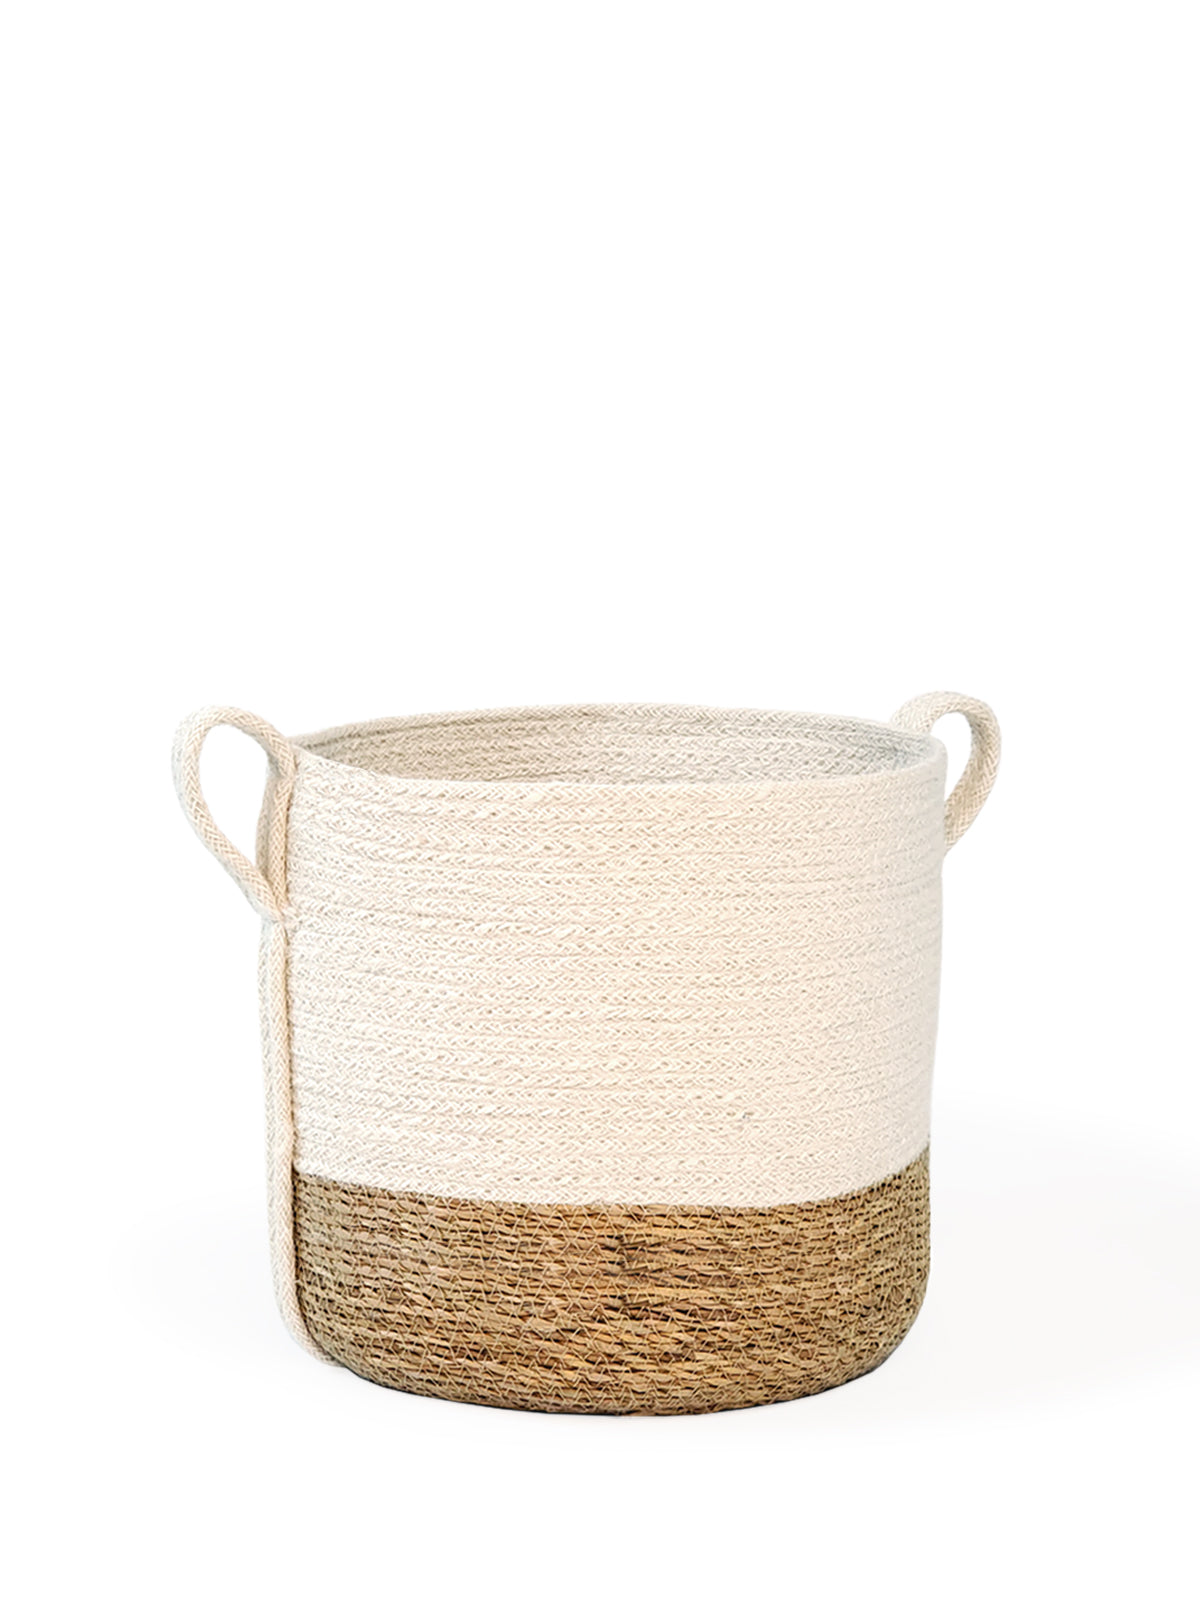 Savar Basket with Side Handle